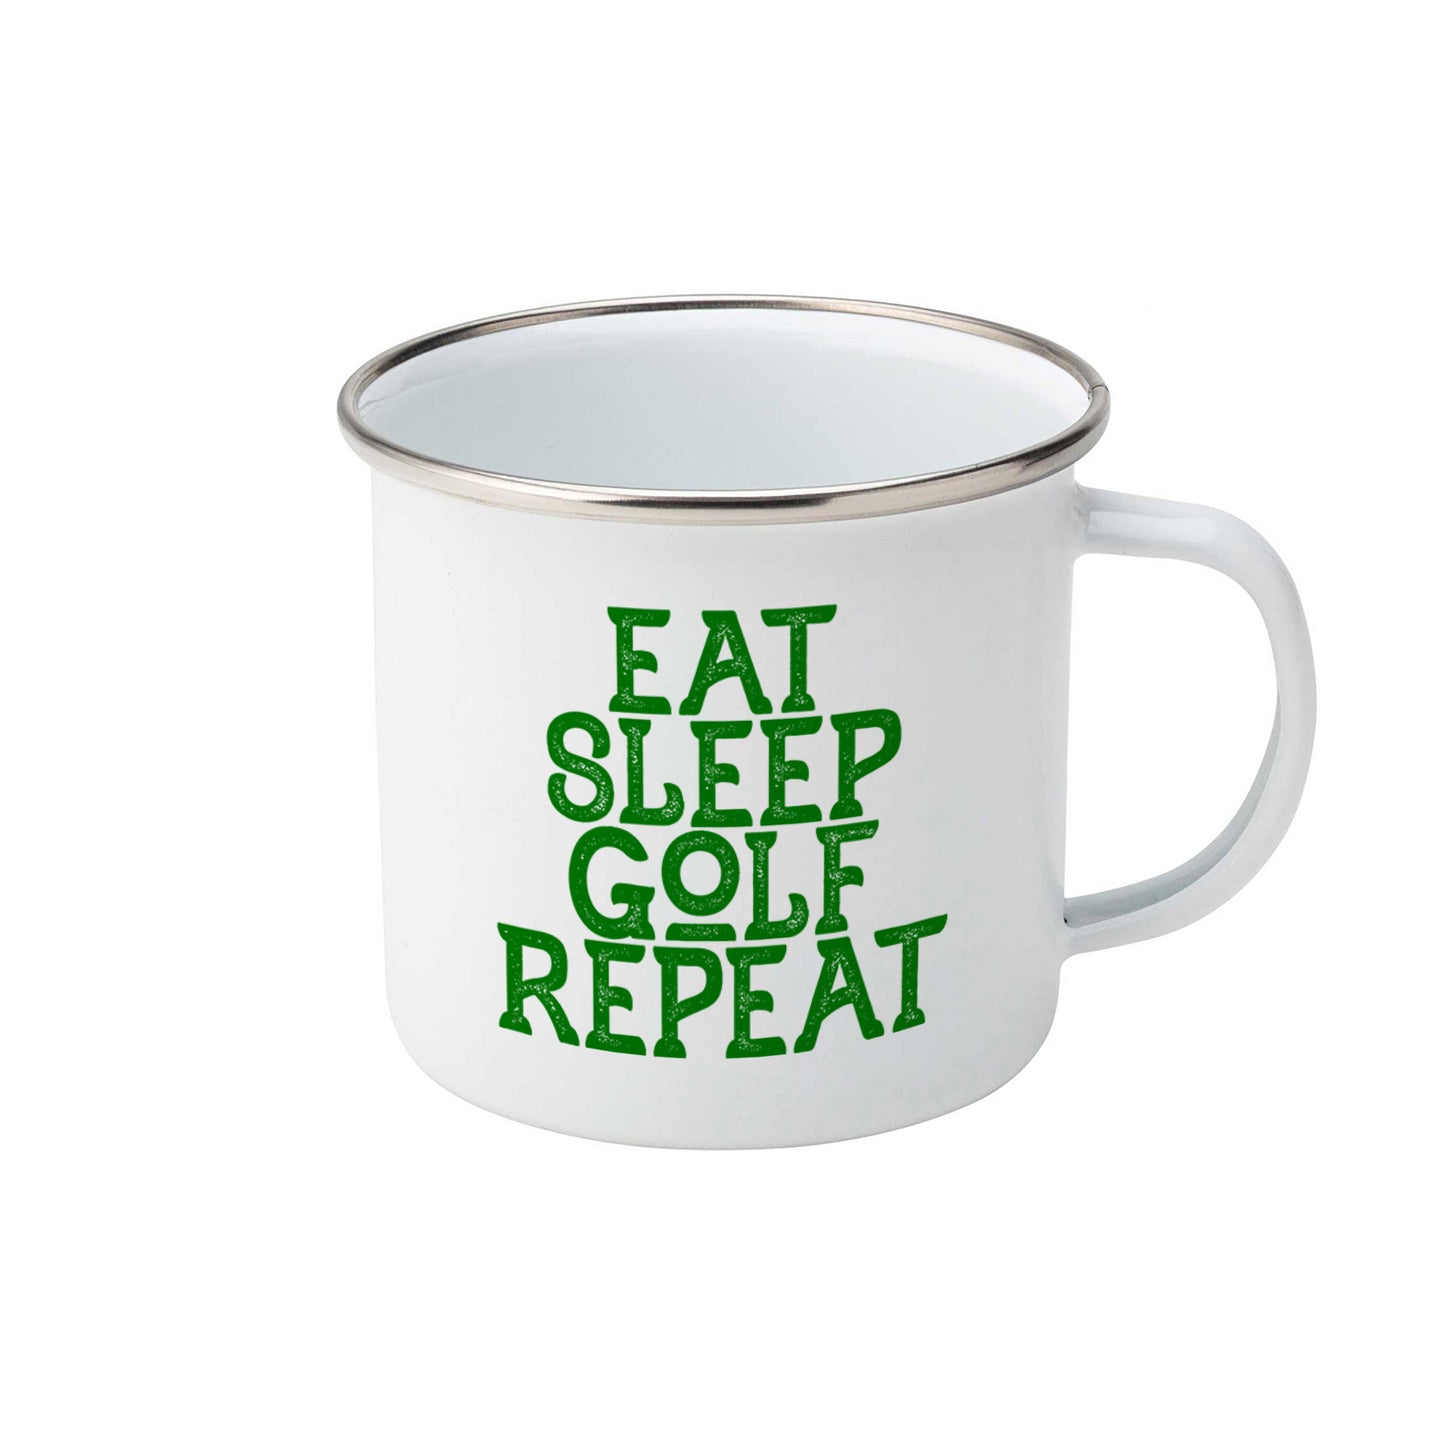 Eat sleep golf repeat | Enamel mug-Enamel mug-Adnil Creations